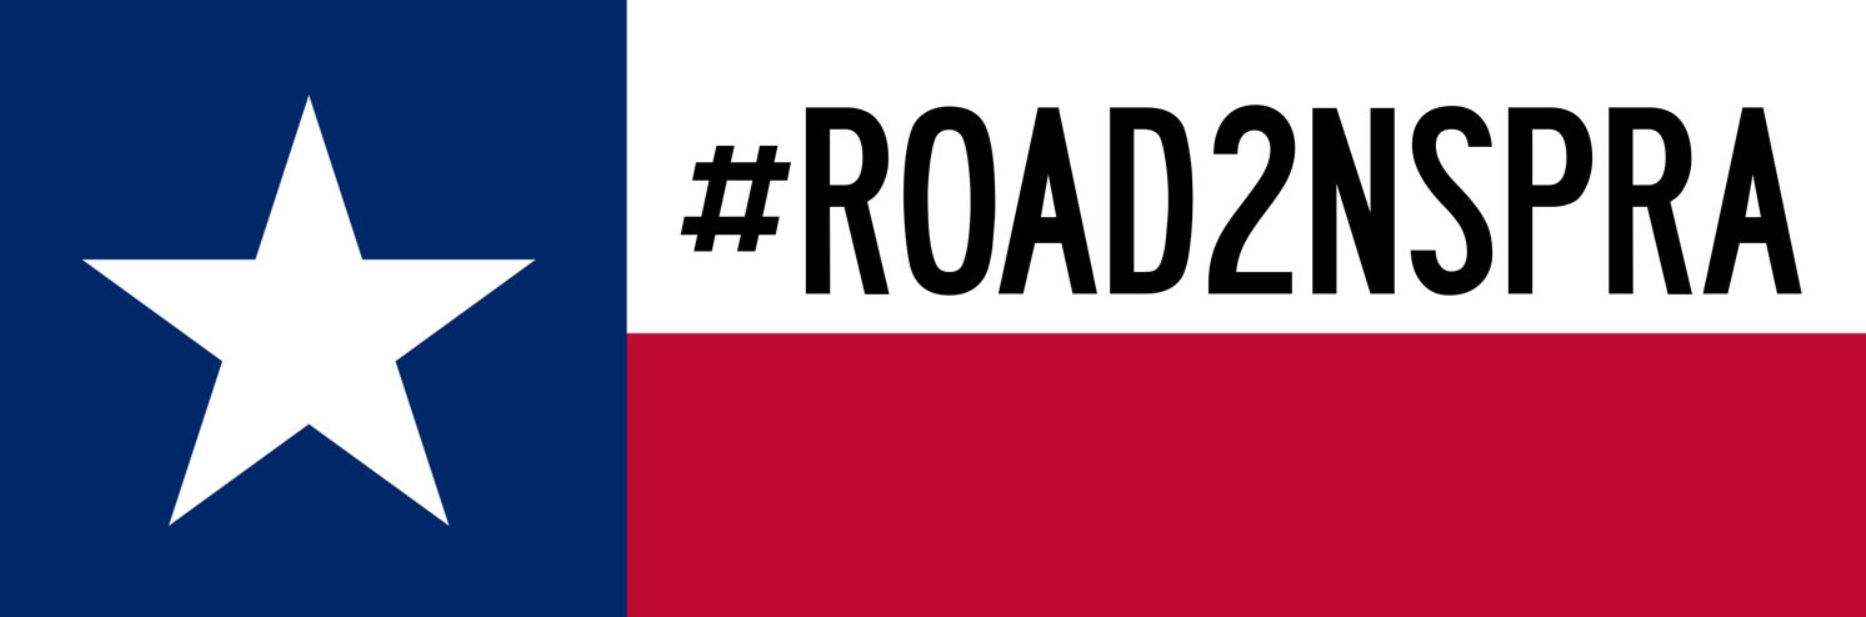 ROAD2NSPRA 2017 logo